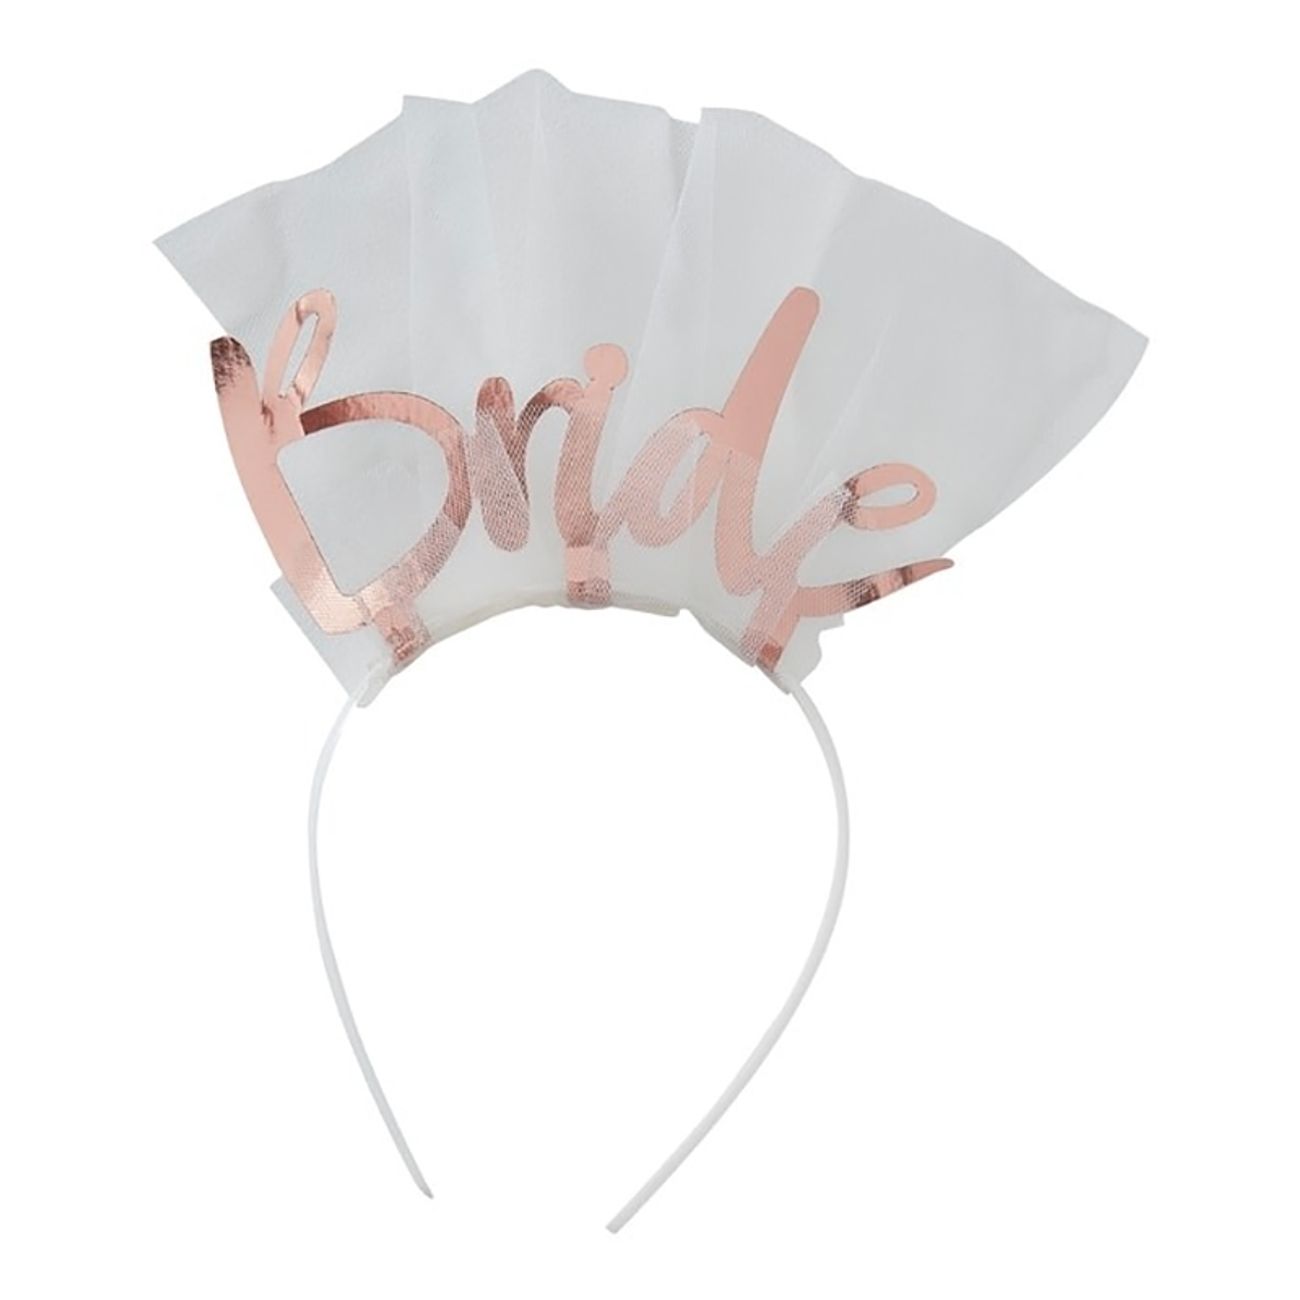 diadem-bride-to-be-roseguld-1